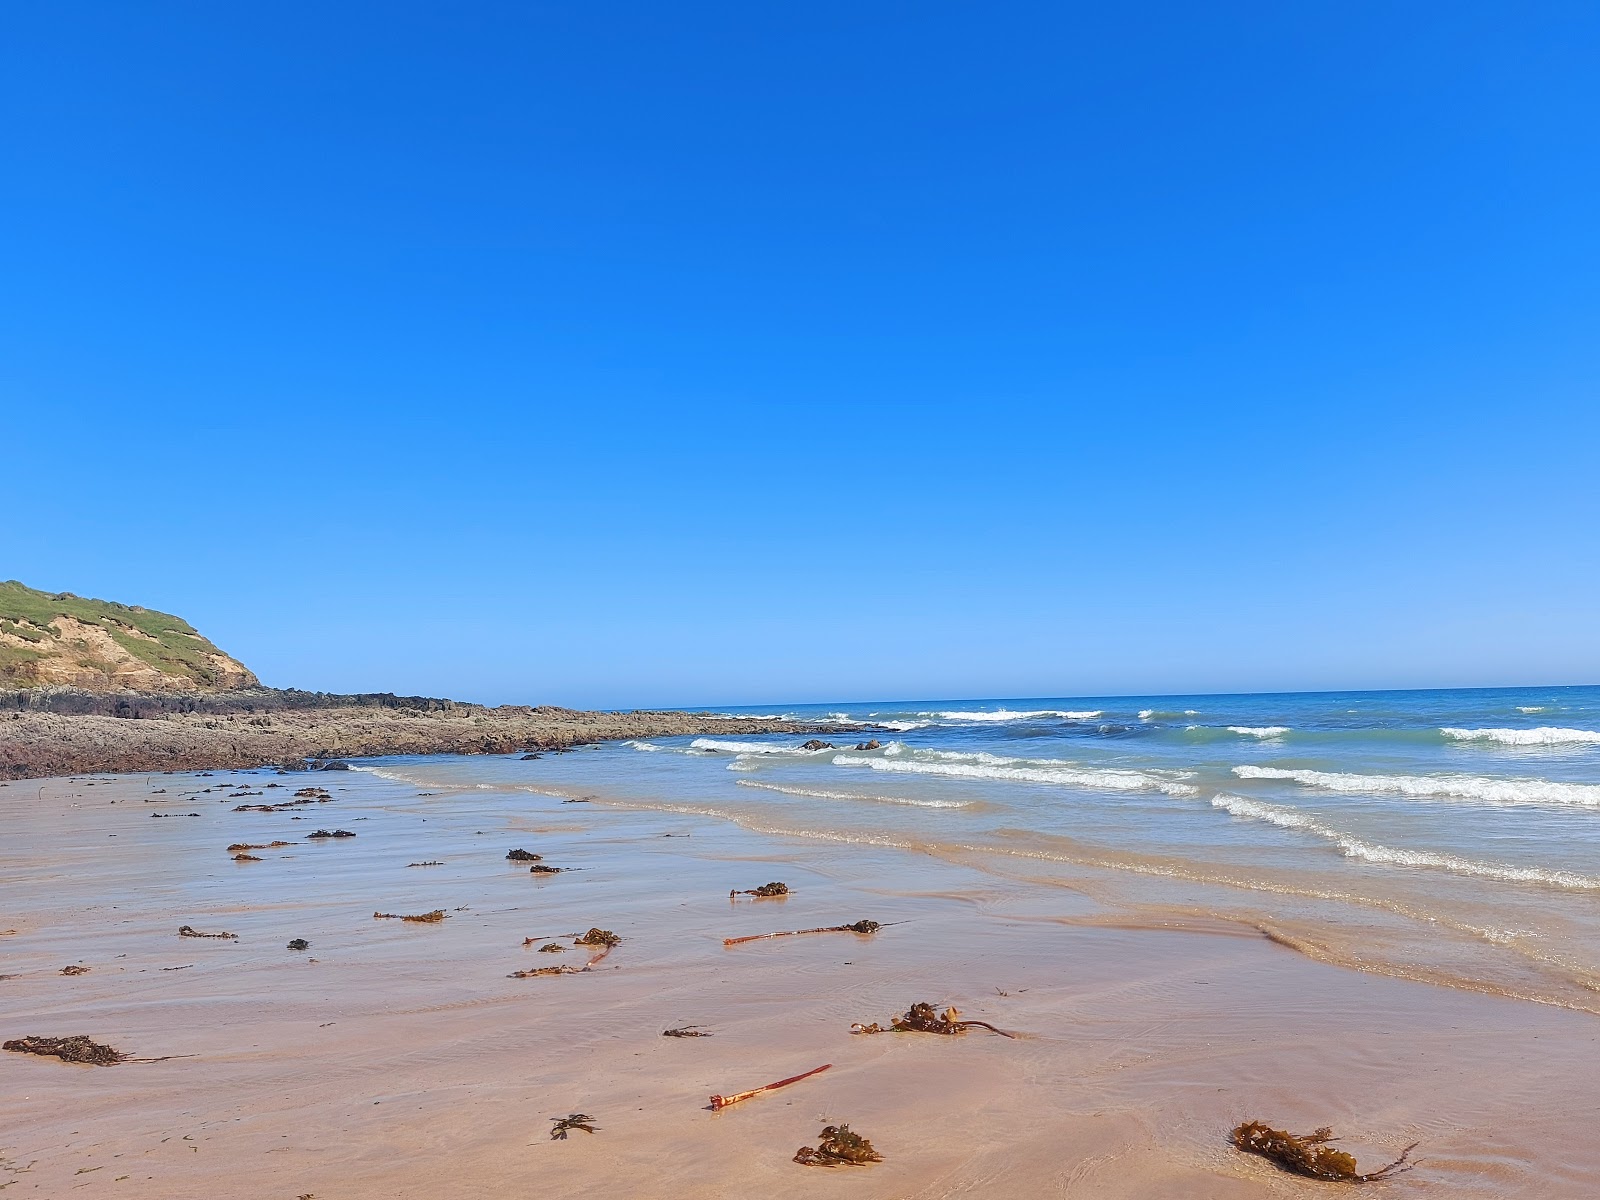 Foto af Ballycroneen Beach - populært sted blandt afslapningskendere